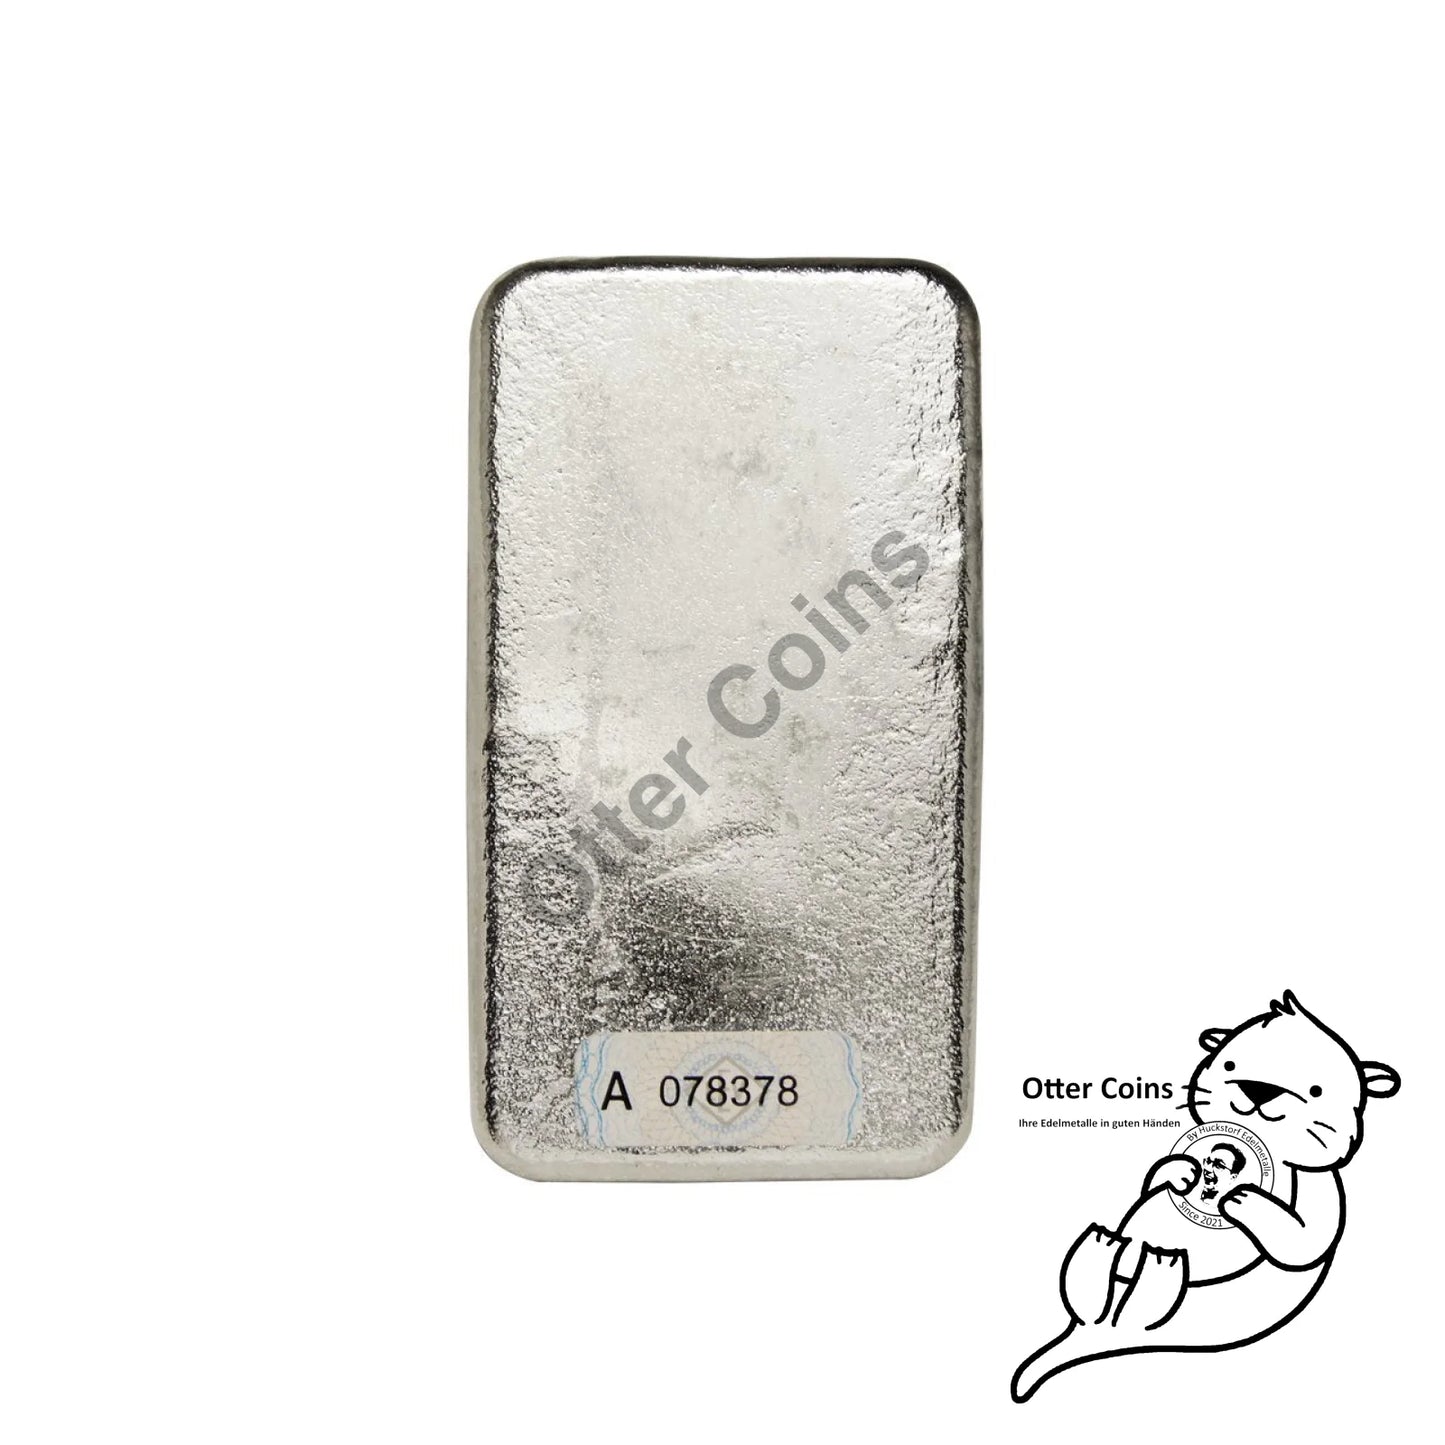 Silberbarren LEV ’Doduco’ - 500 g.9999 gegossen feinmattiert